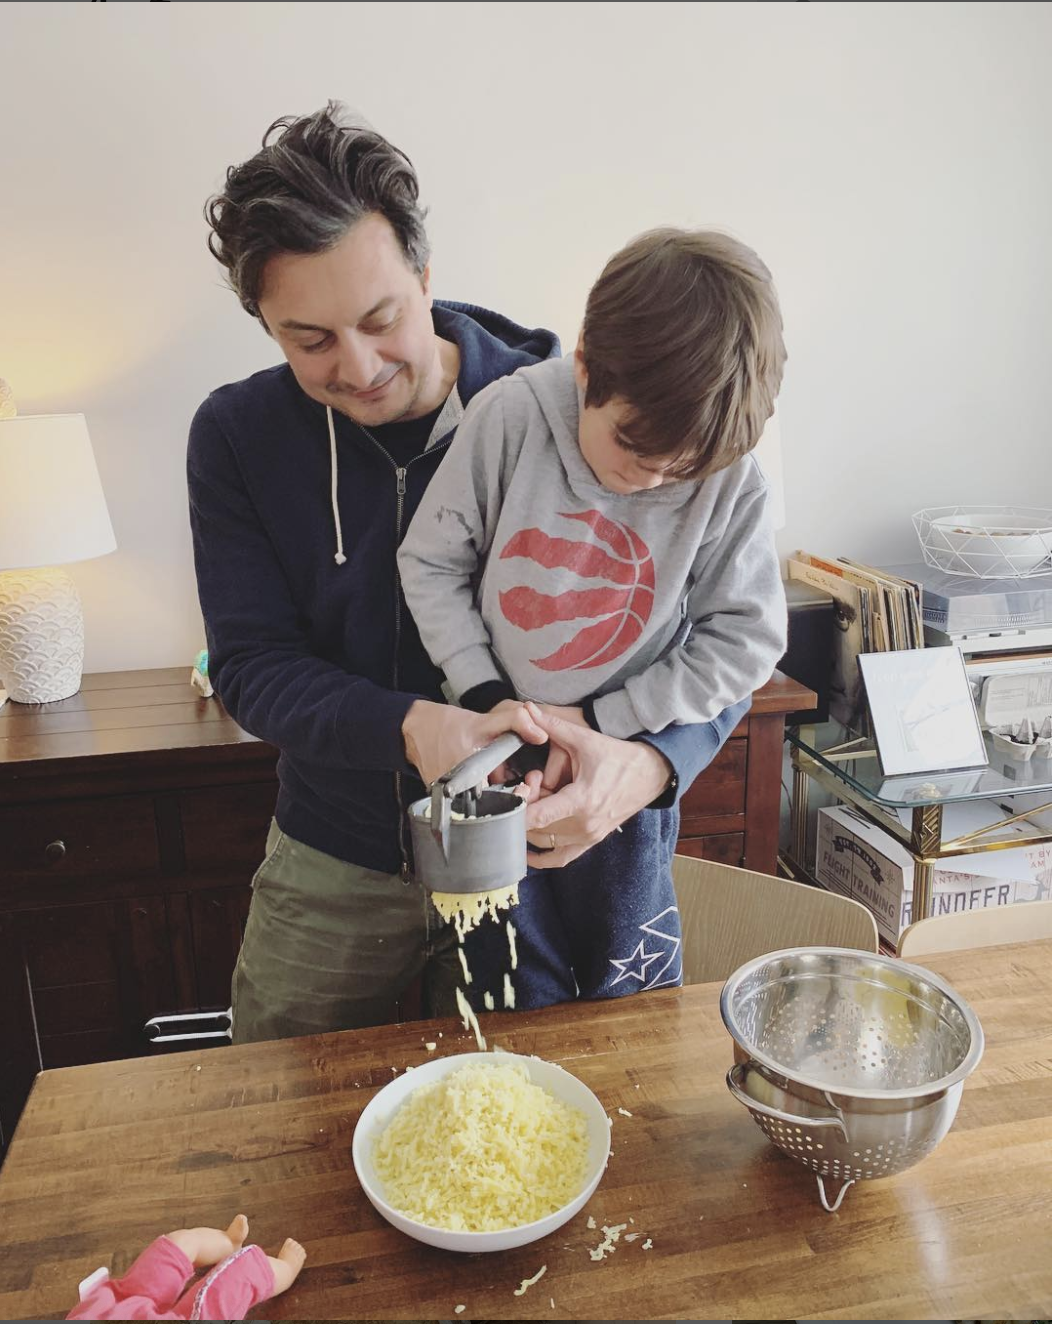 roberto and his son making gnocchi